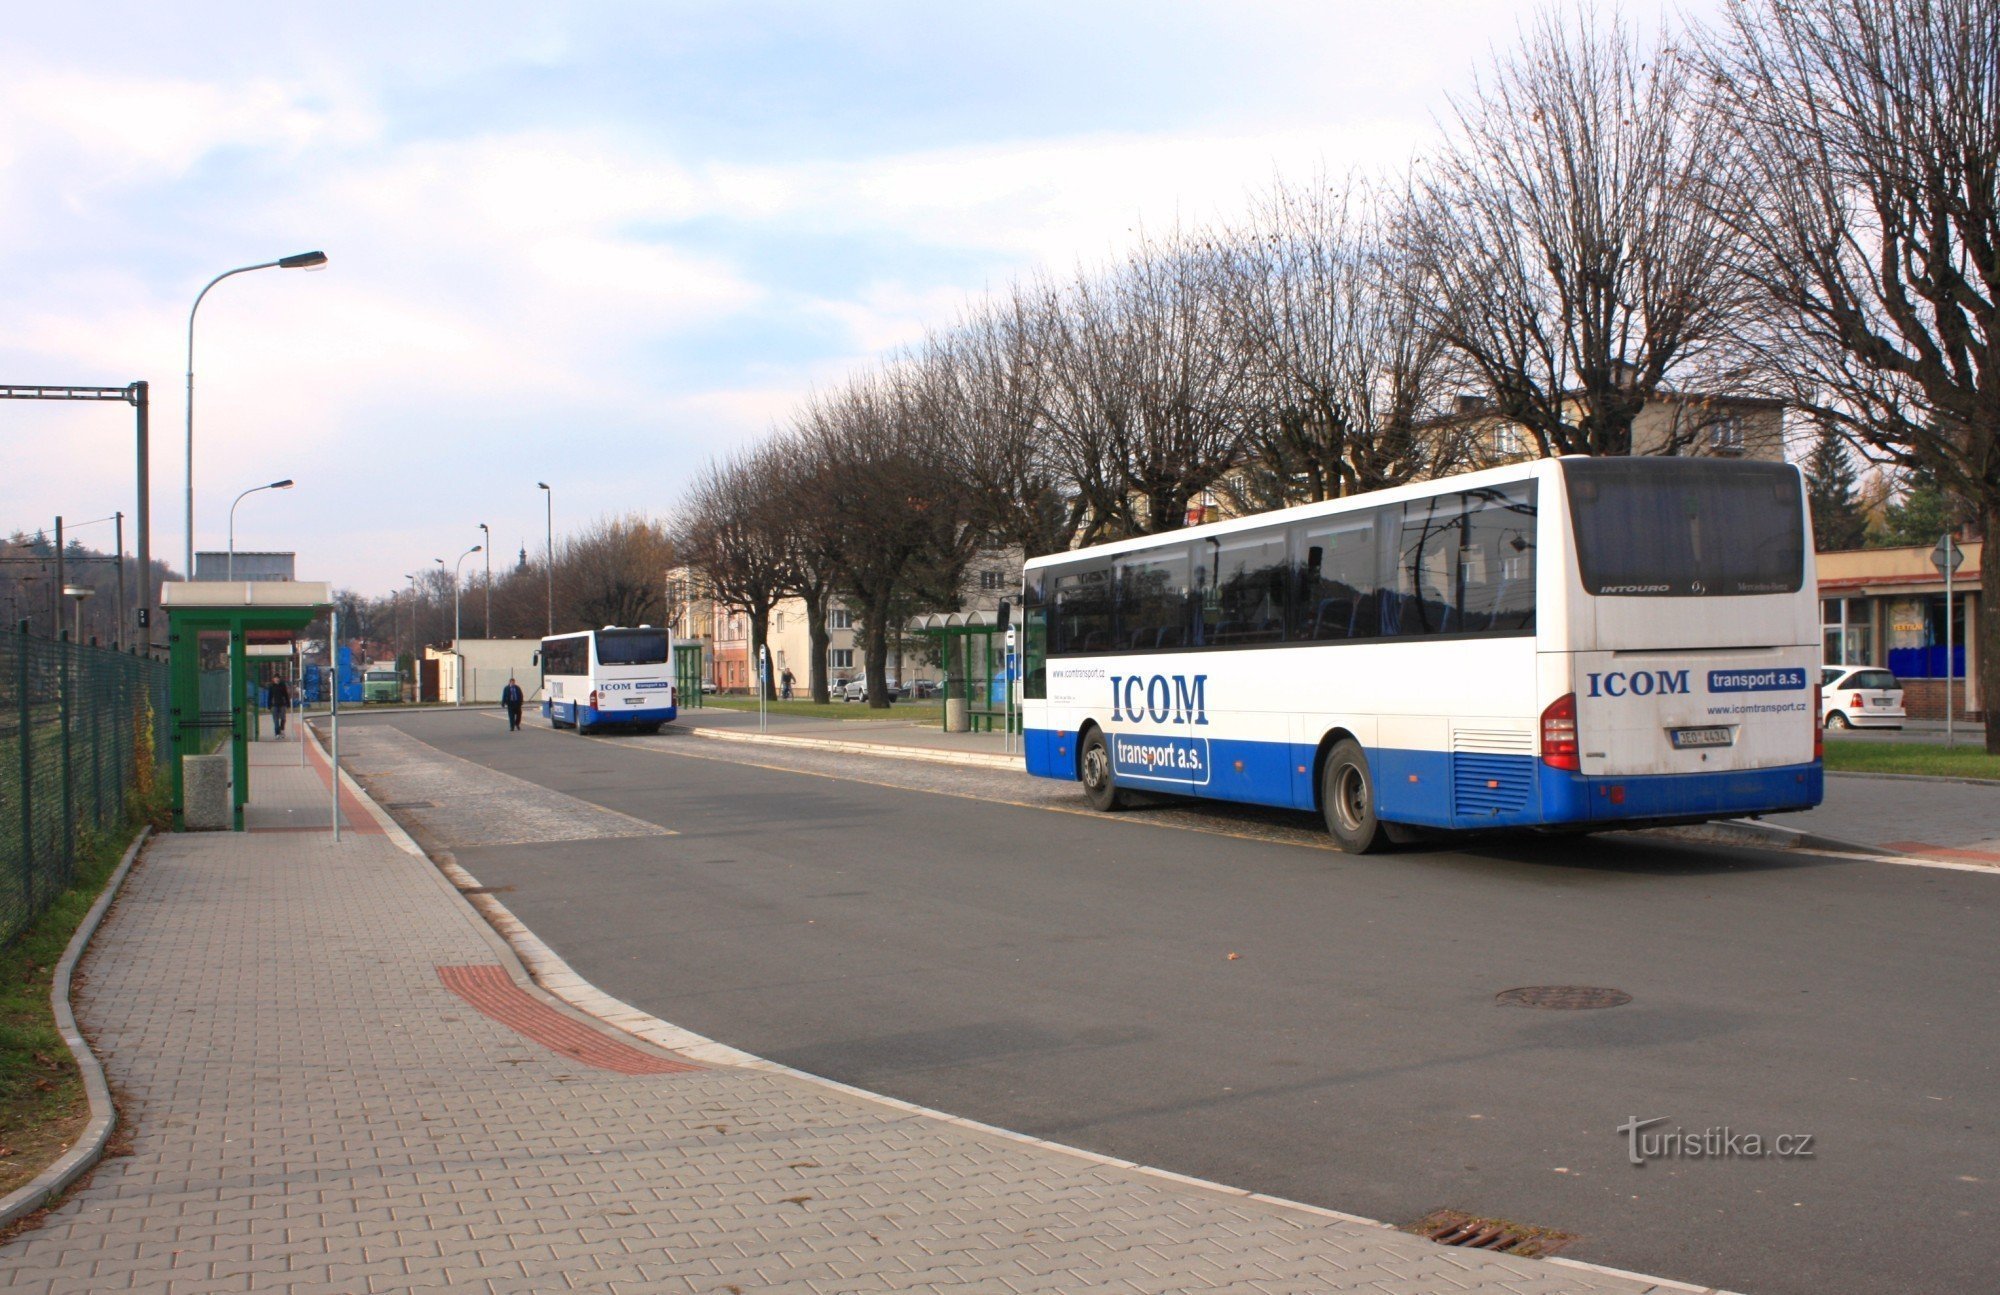 Letohrad - bus station